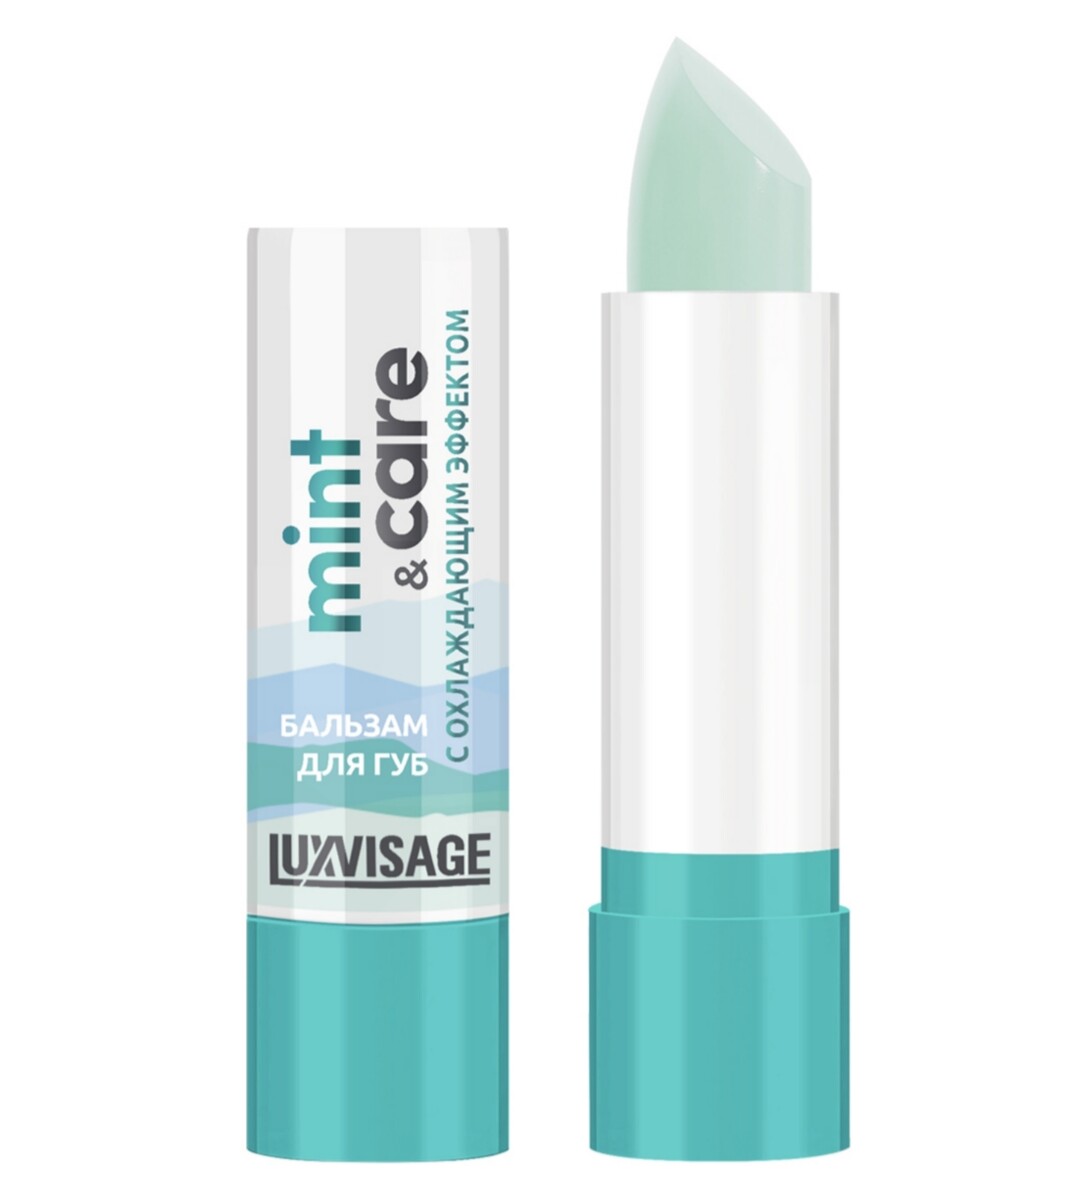 Luxvisage бальзам для губ luxvisage mint & care с охлаждающим эффектом 3,9г luxvisage бальзам для губ luxvisage shine